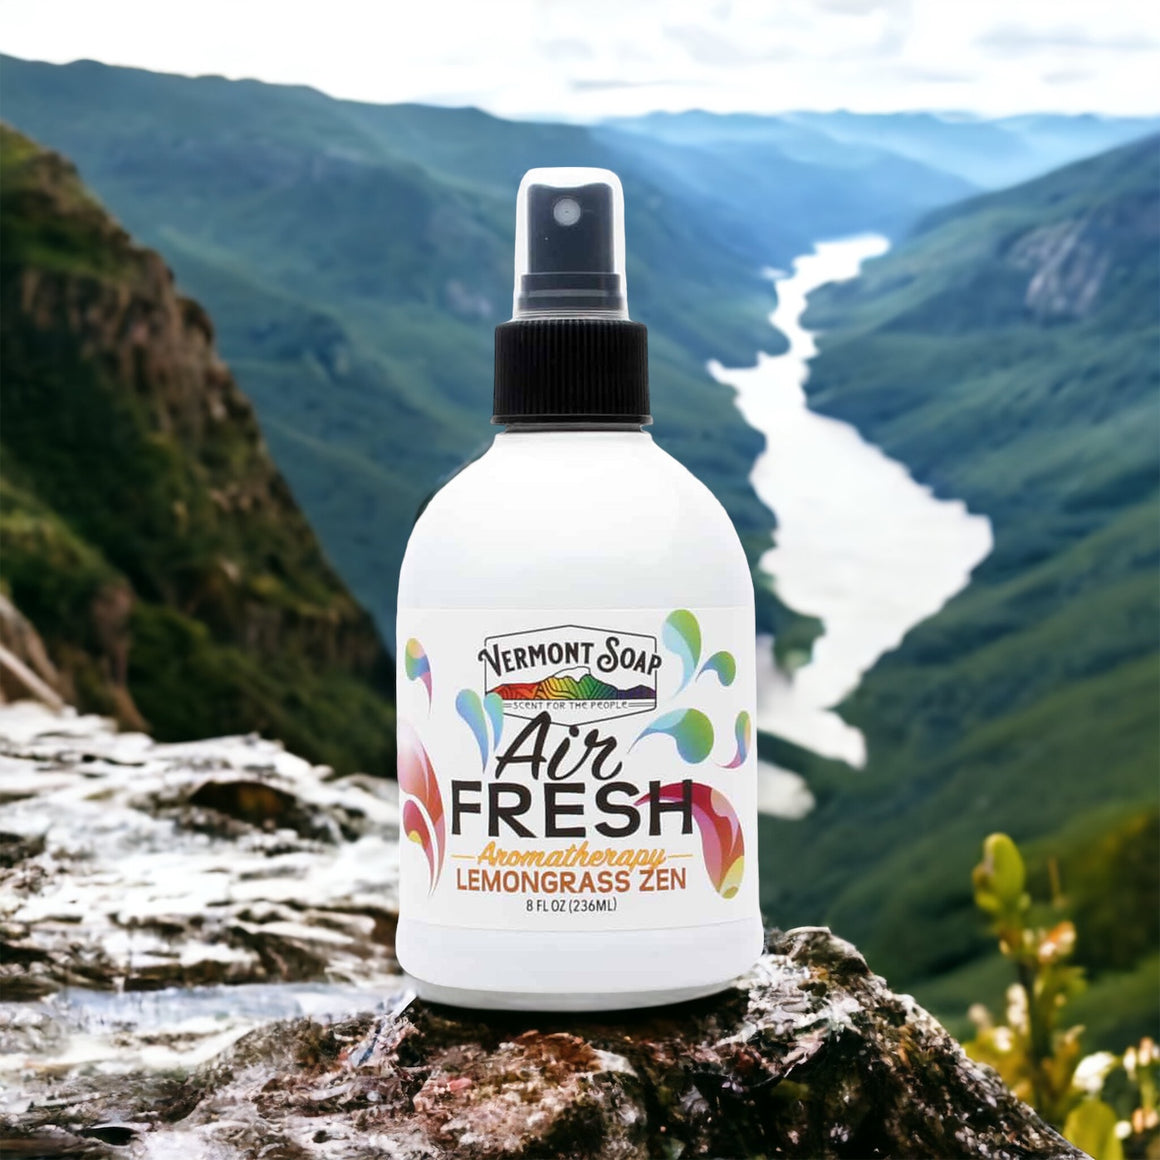 Lemongrass Zen Air Fresh Aromatherapy Spray Mister - Vermont Soap